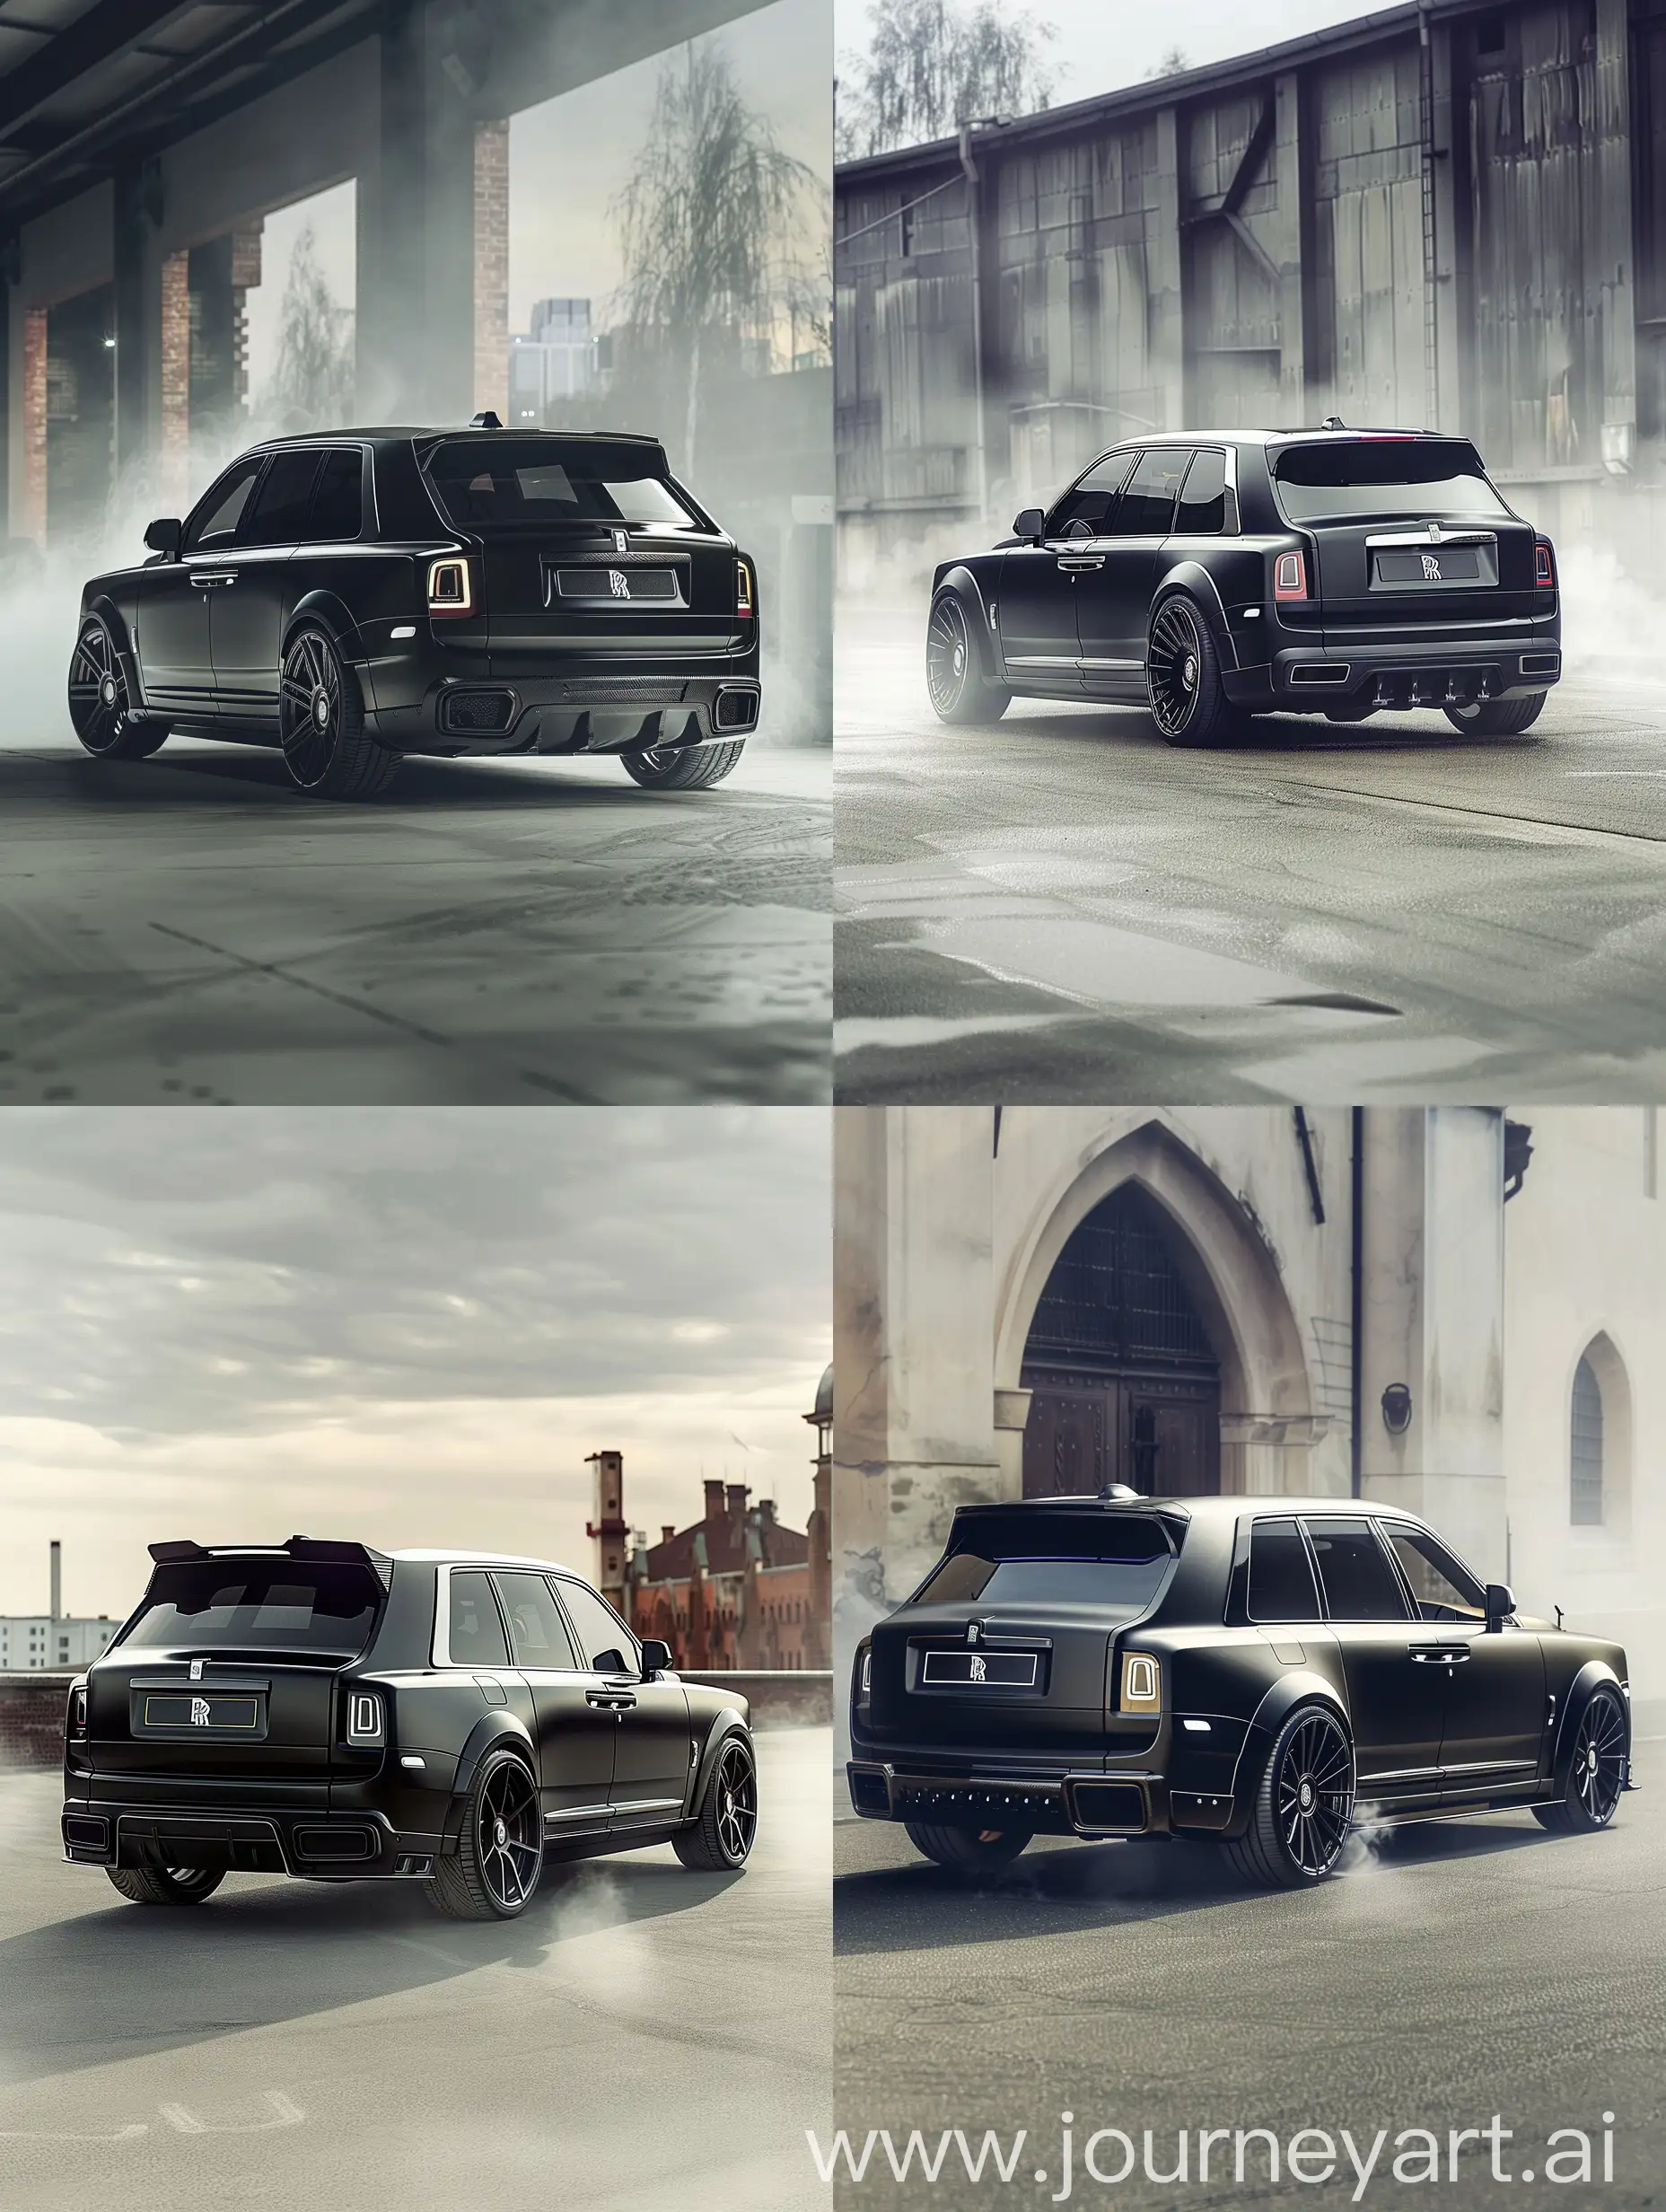 Urban-Street-Photoshoot-with-Black-Mansory-Rolls-Royce-Cullinan